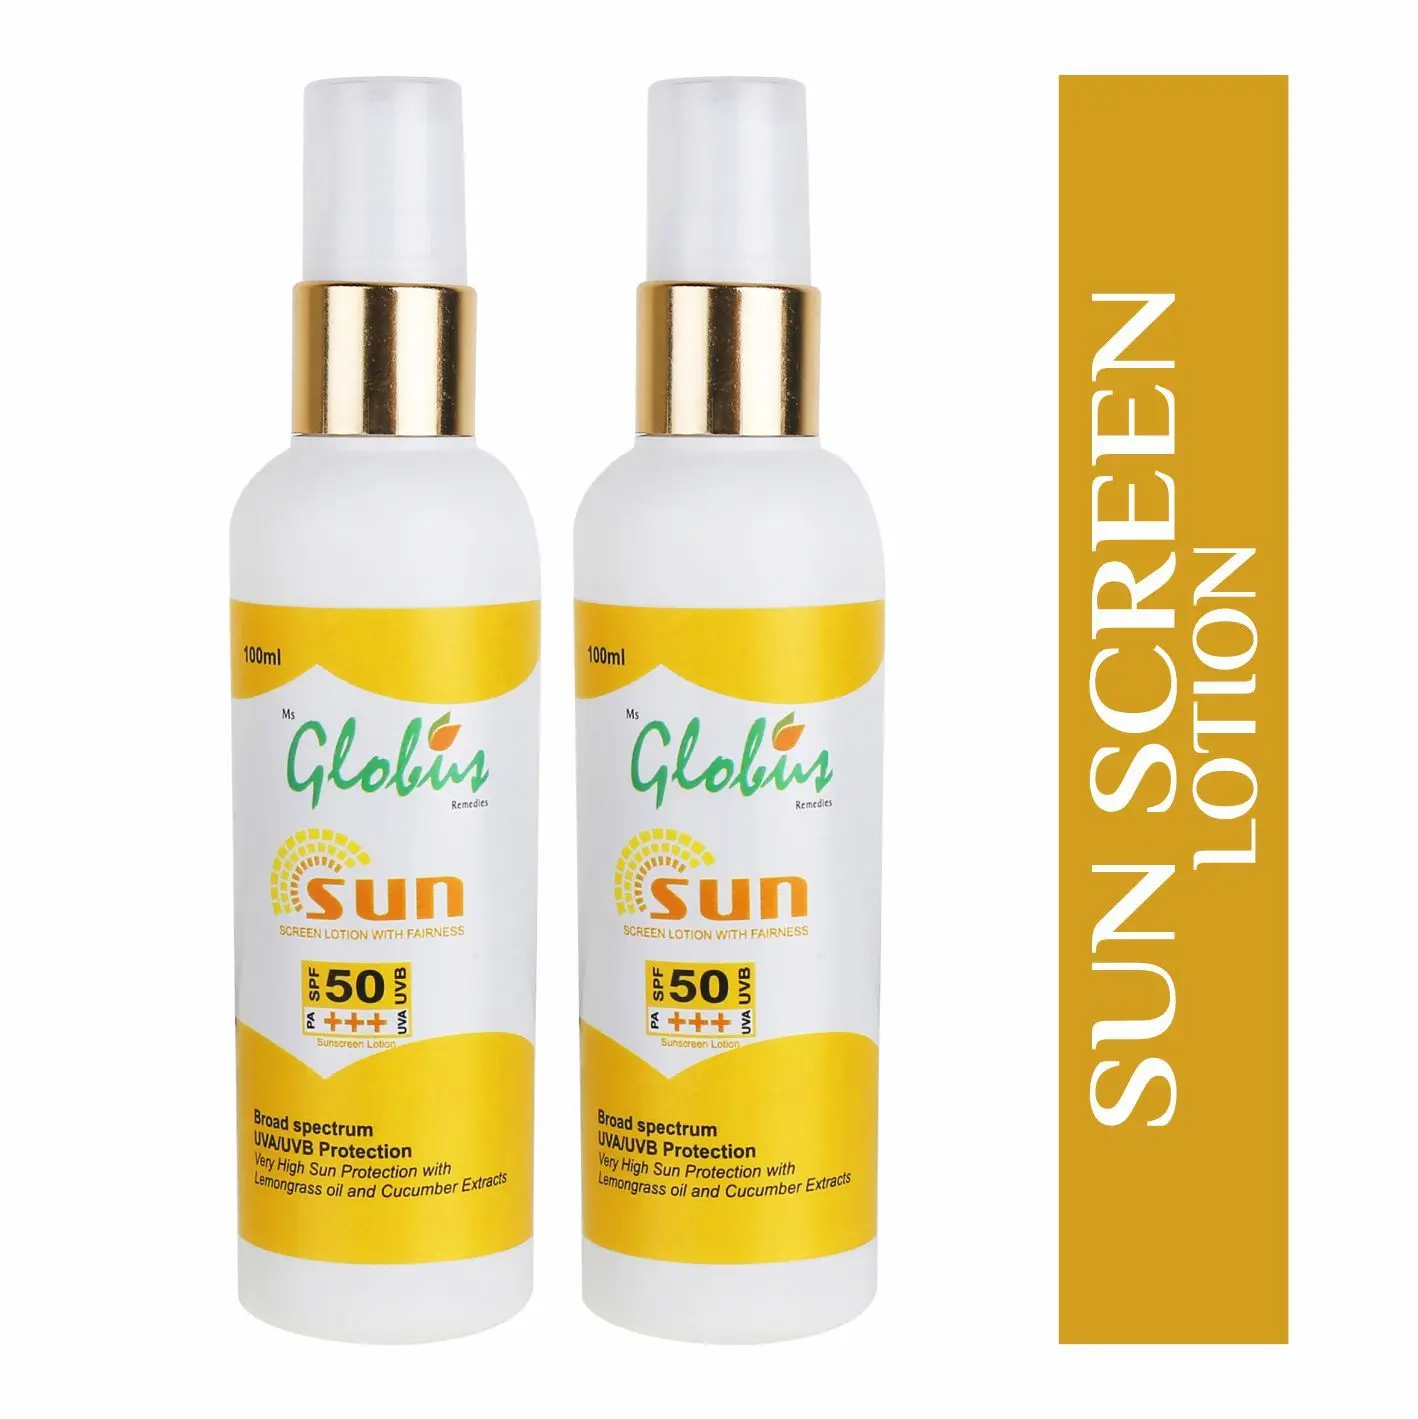 Globus Ayurvedic Sunscreen Lotion Spf 50 Pa+++ 100 ml (Pack Of 2)